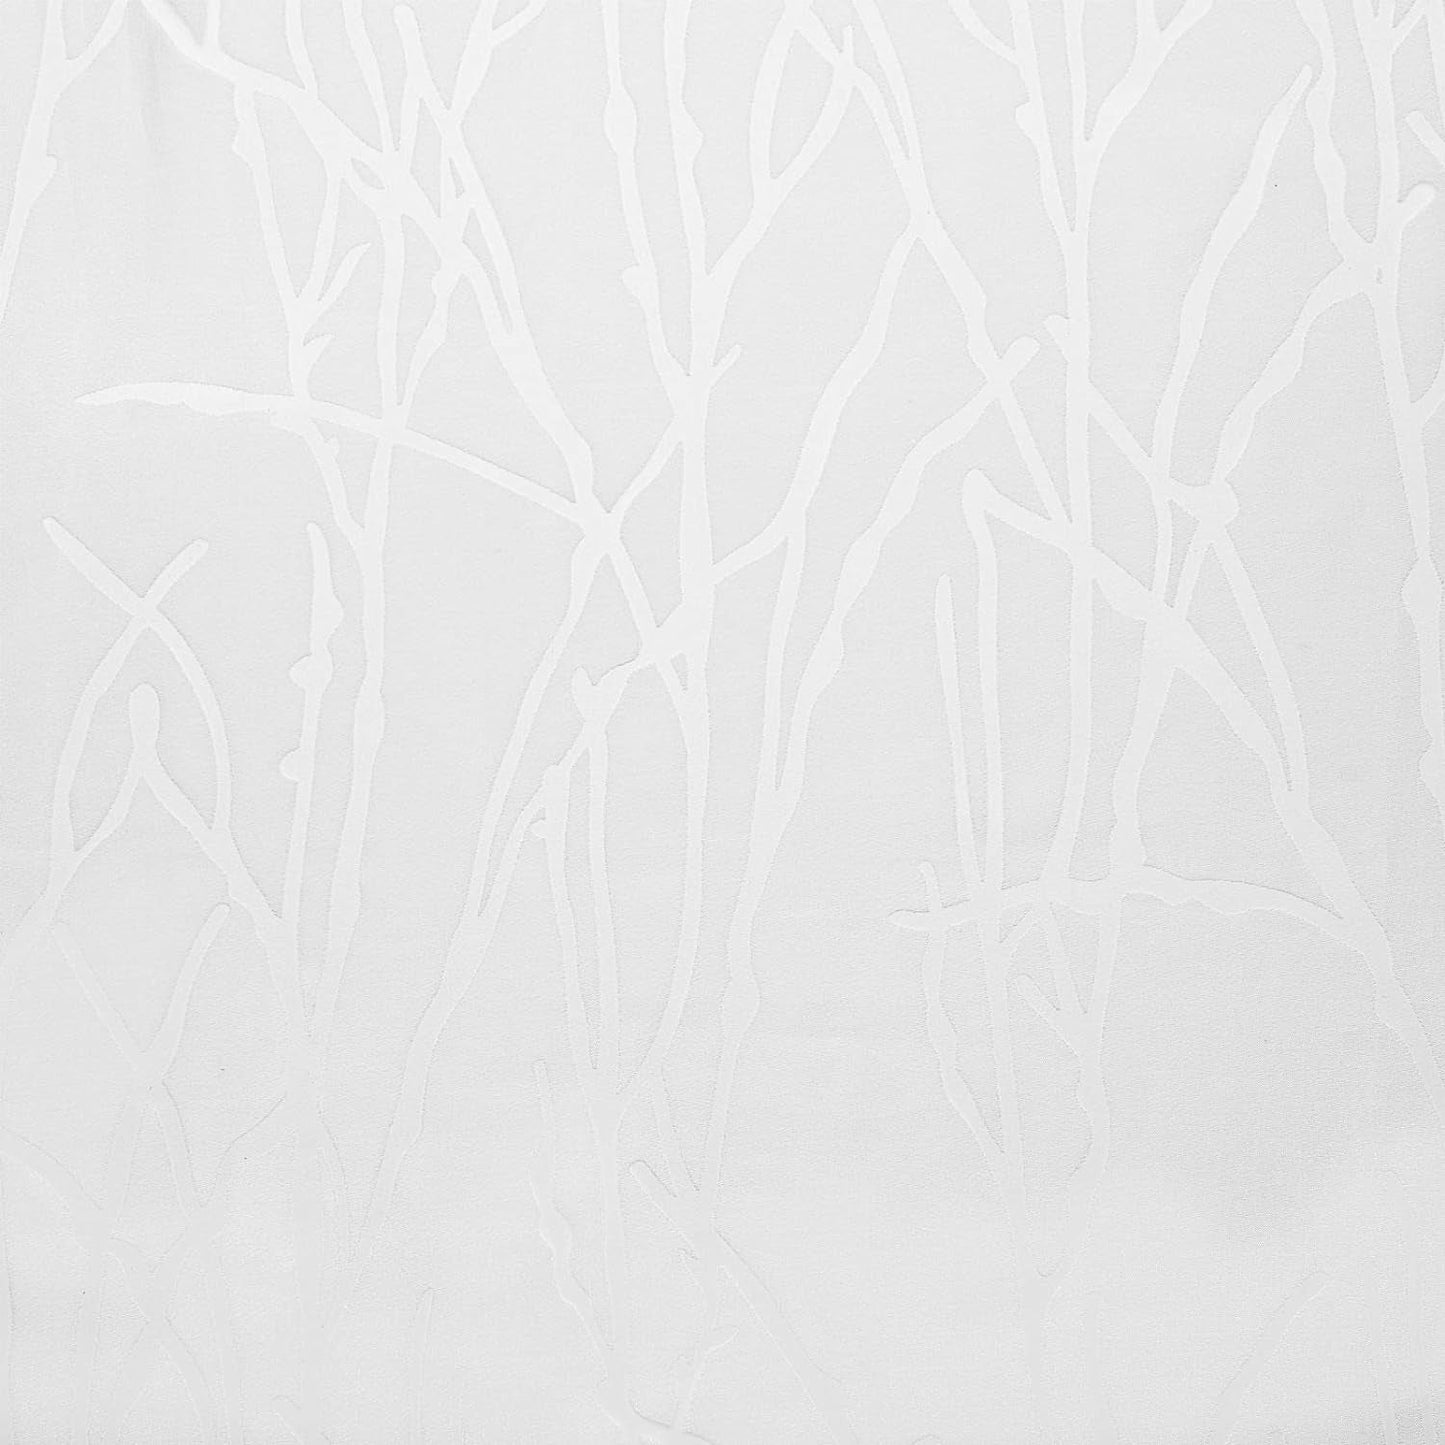 Exclusive Home Edinburgh Sheer Branch Burnout Grommet Top Curtain Panel Pair, 52" X 84", Winter White